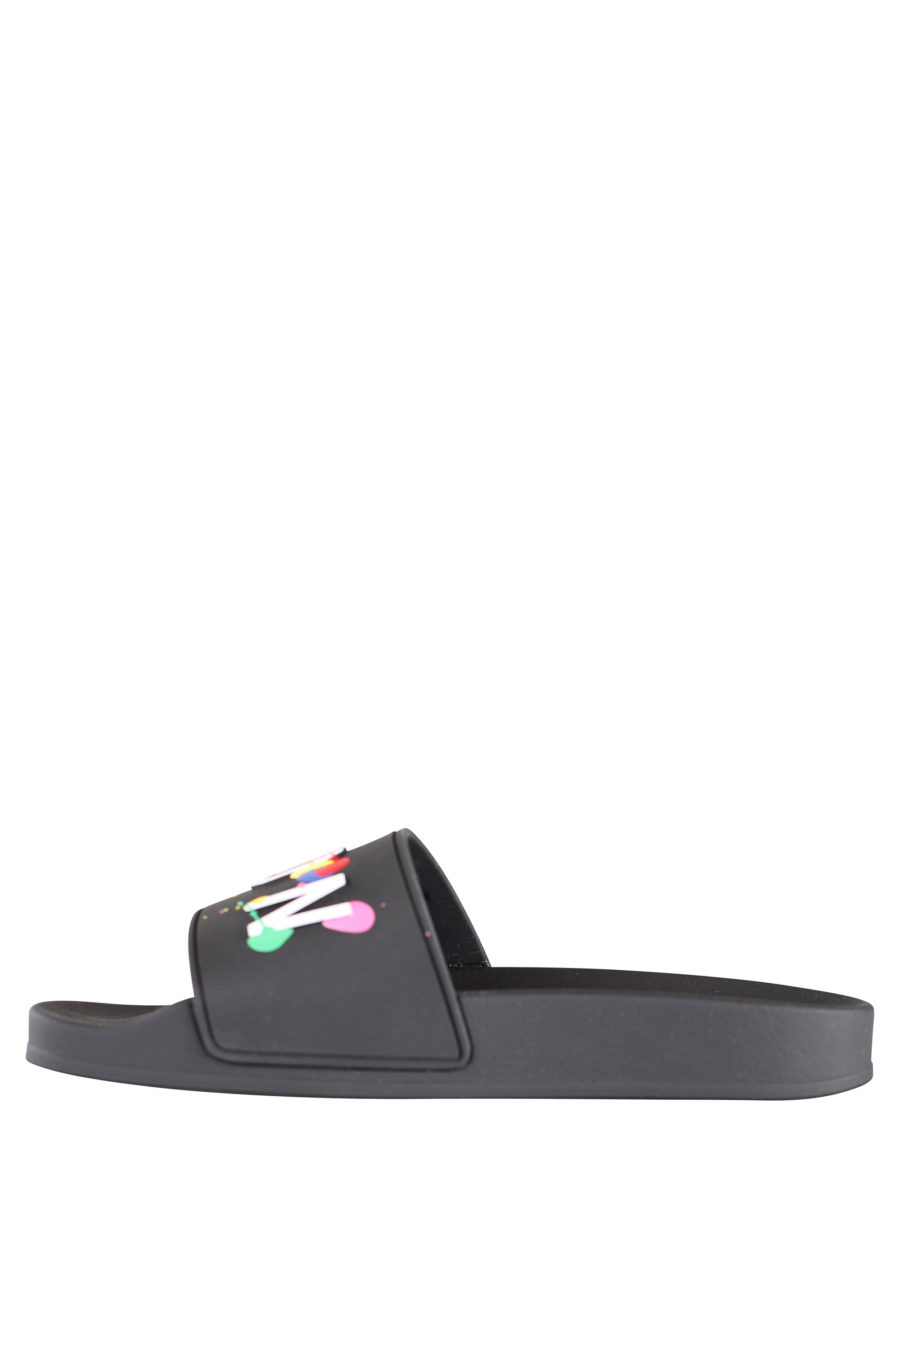 Black flip flops with "icon splash" logo - IMG 9957